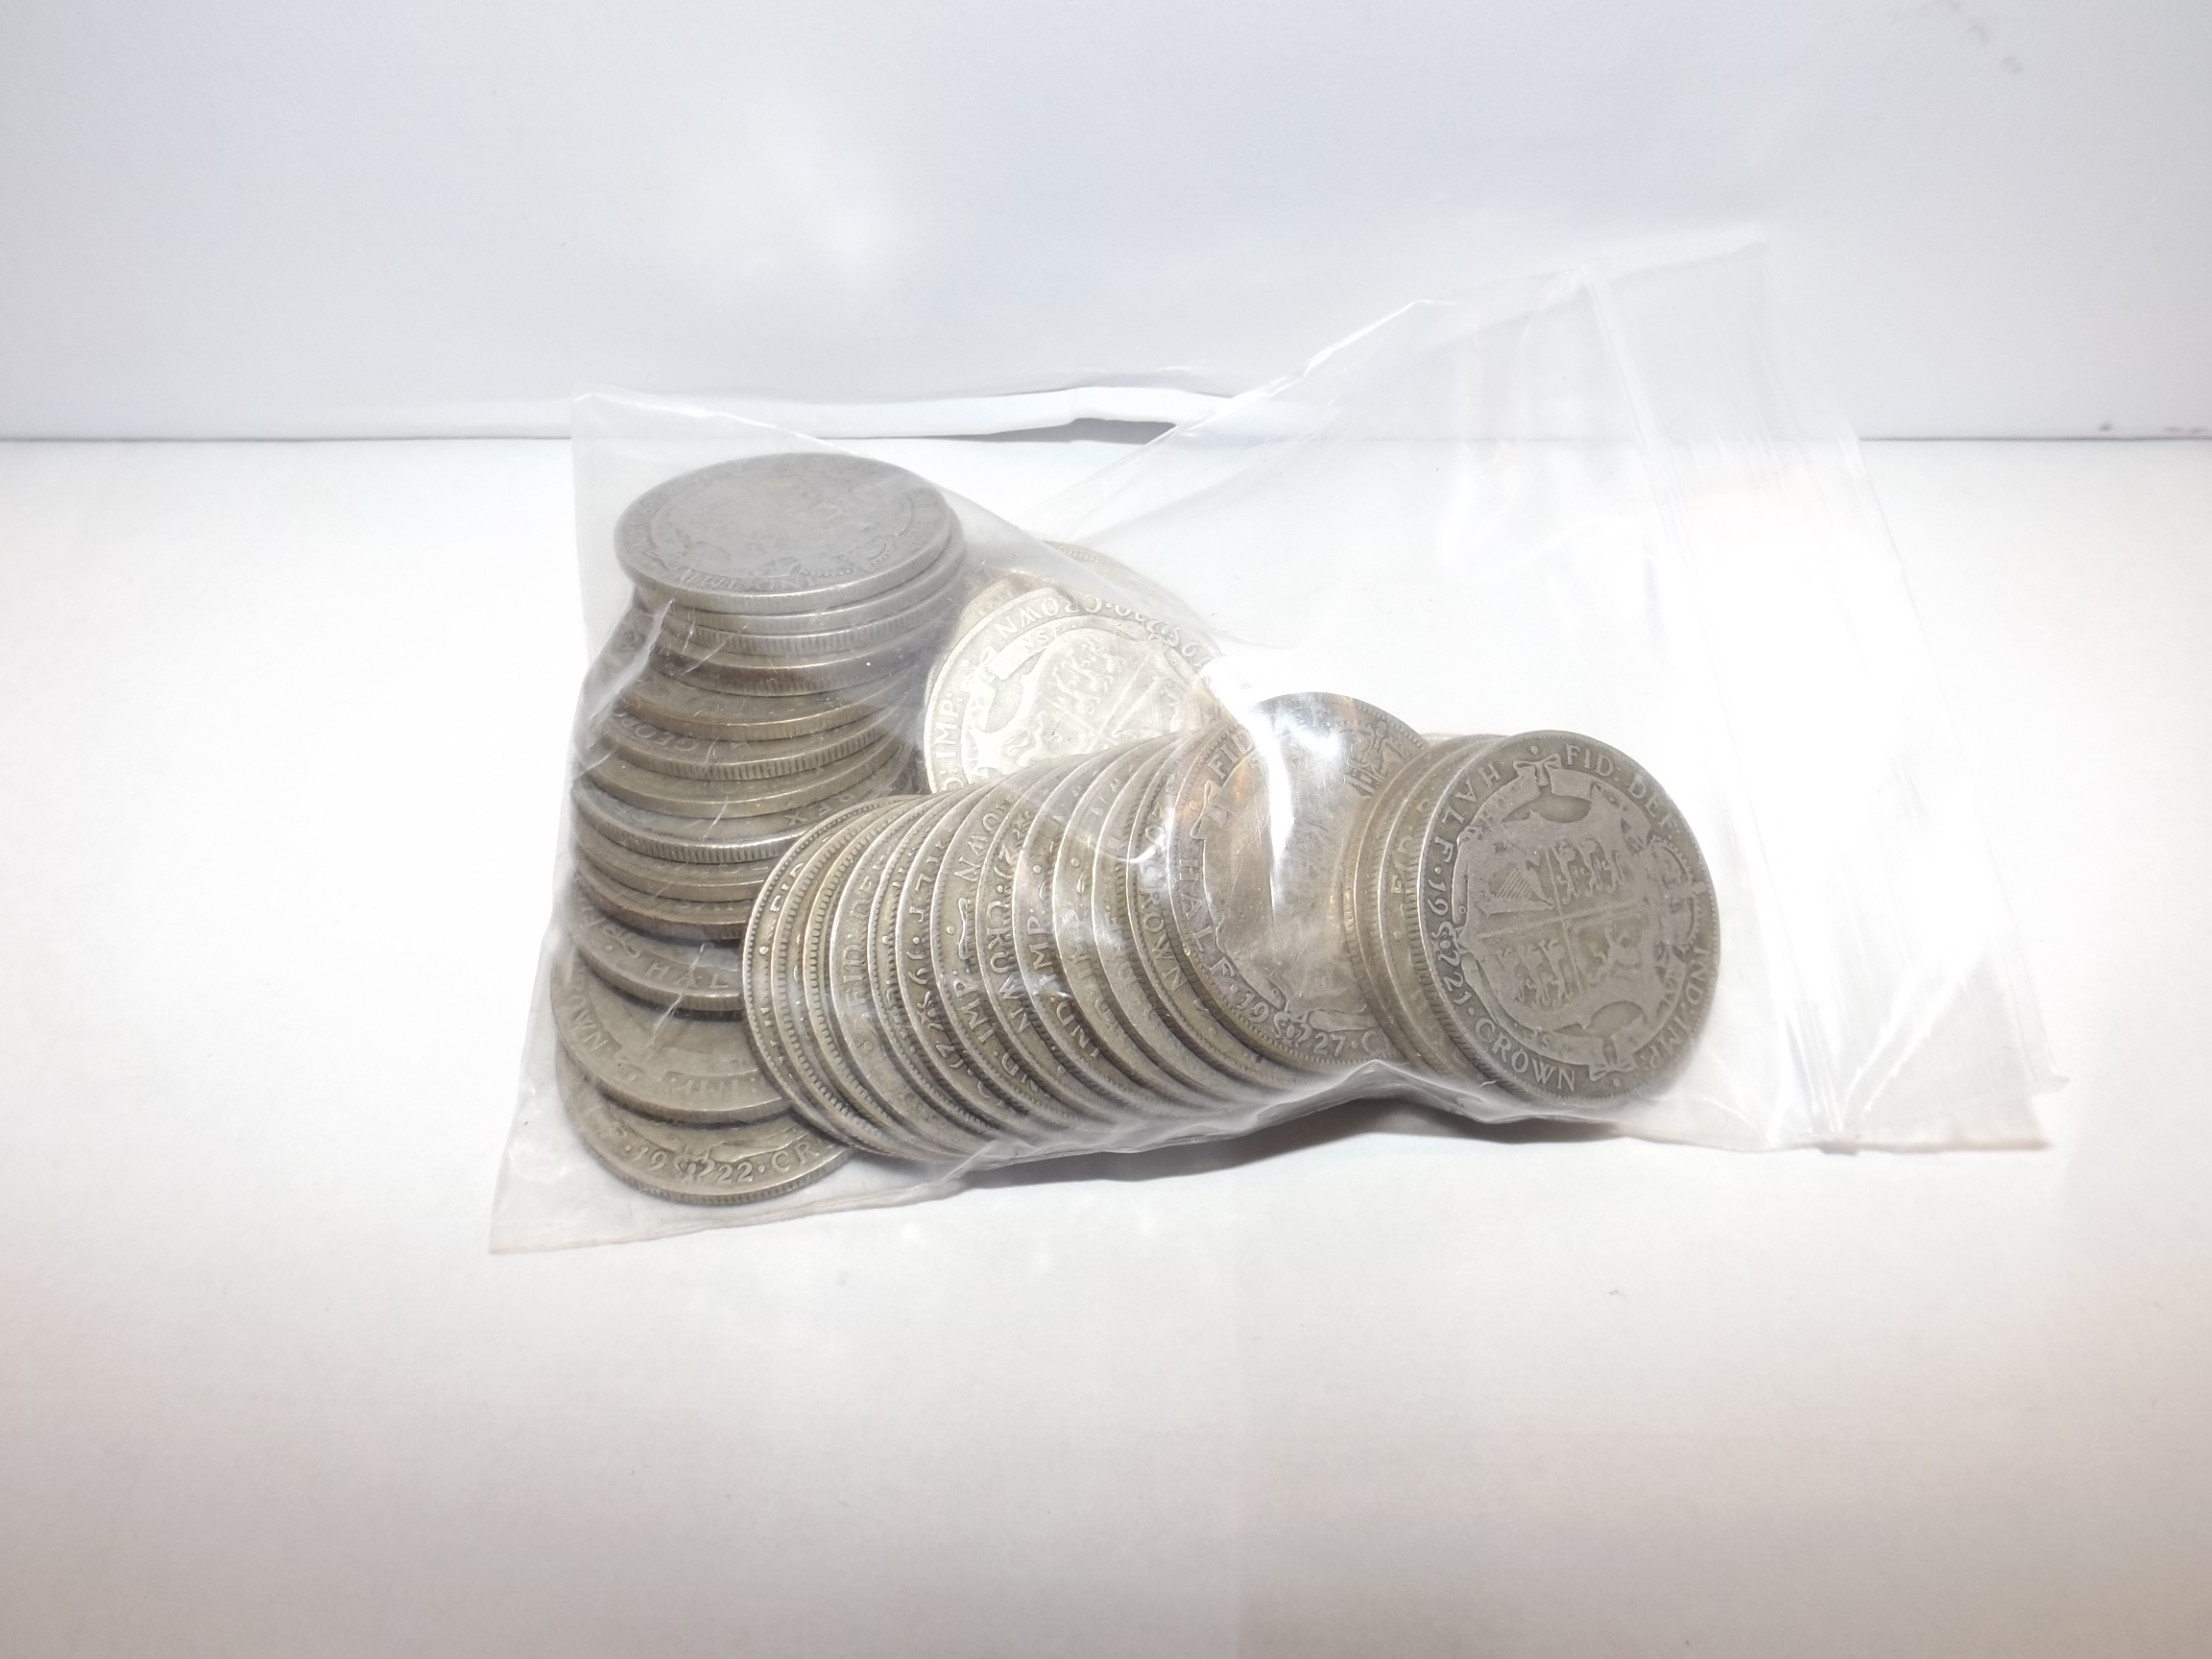 £5 face value British pre 1947 silver coins.